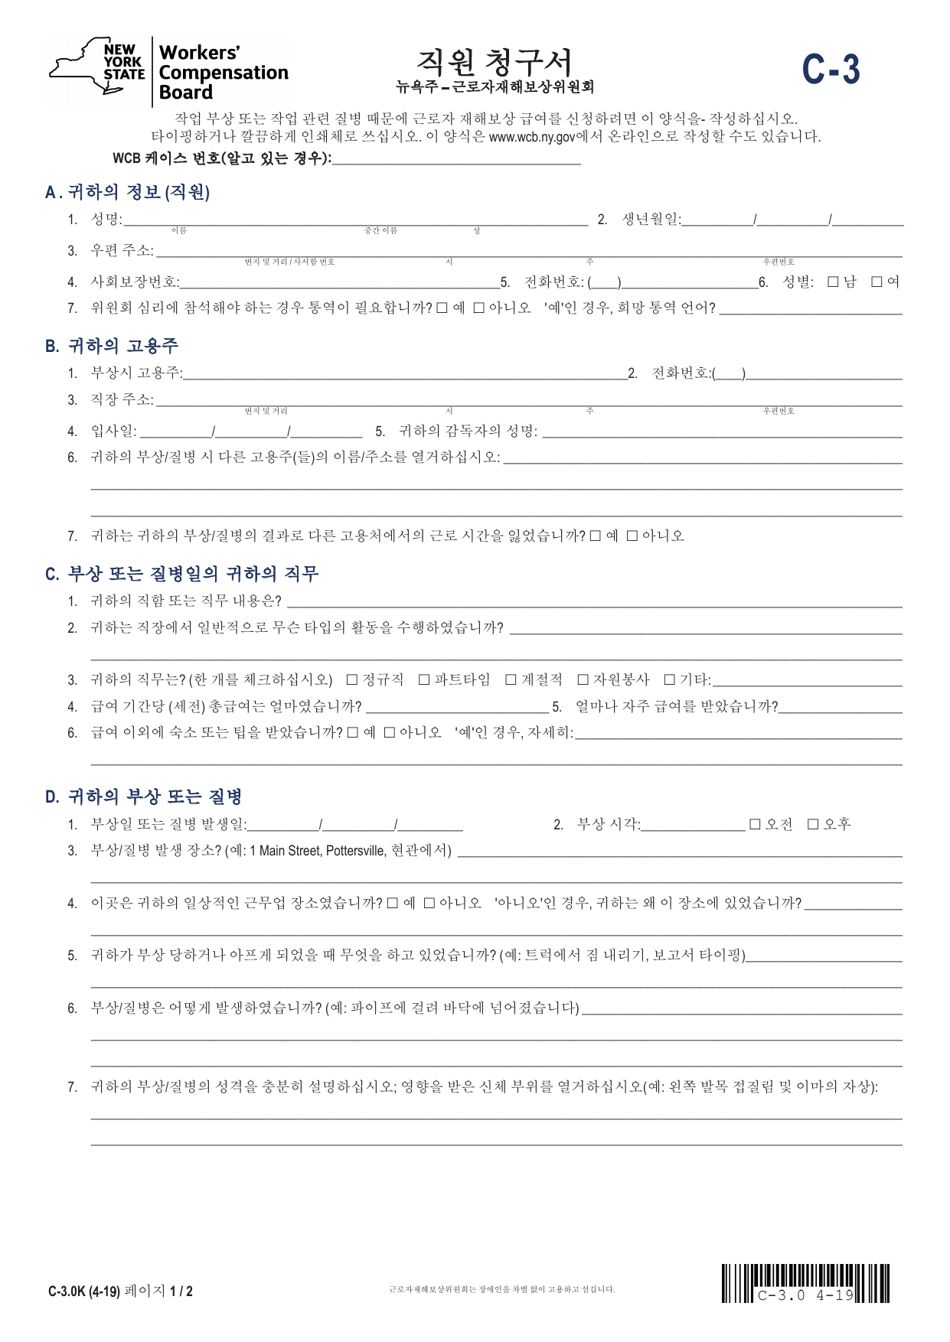 Form C-3K Employee Claim - New York (Korean), Page 1